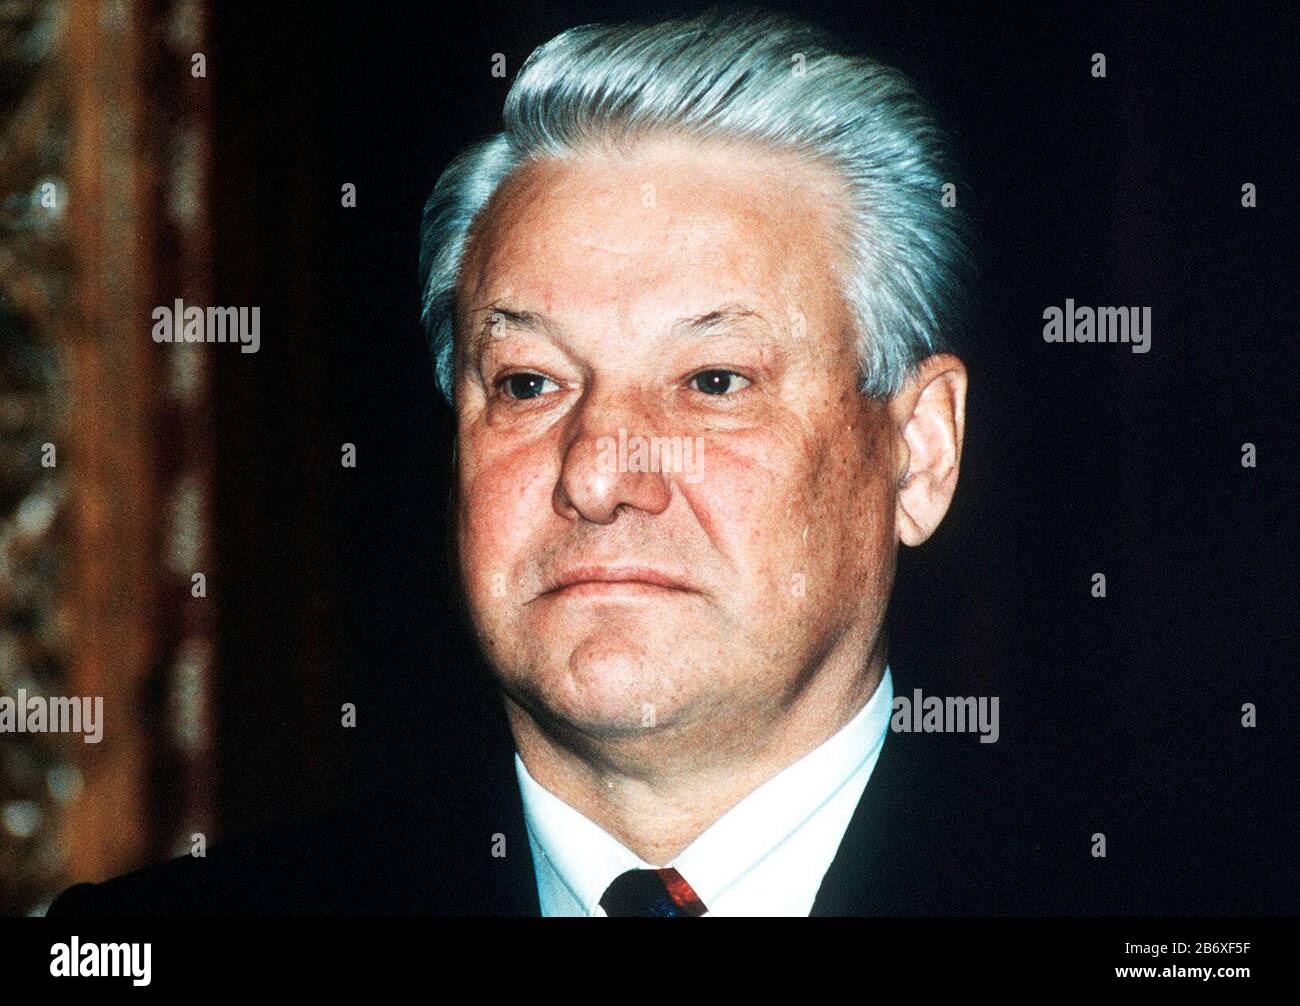 Porträt vom ehemaligen russischen Präsidenten BORIS JELZIN, 2000. Portrait of the former Russian president BORIS JELZIN, 2000. Stock Photo